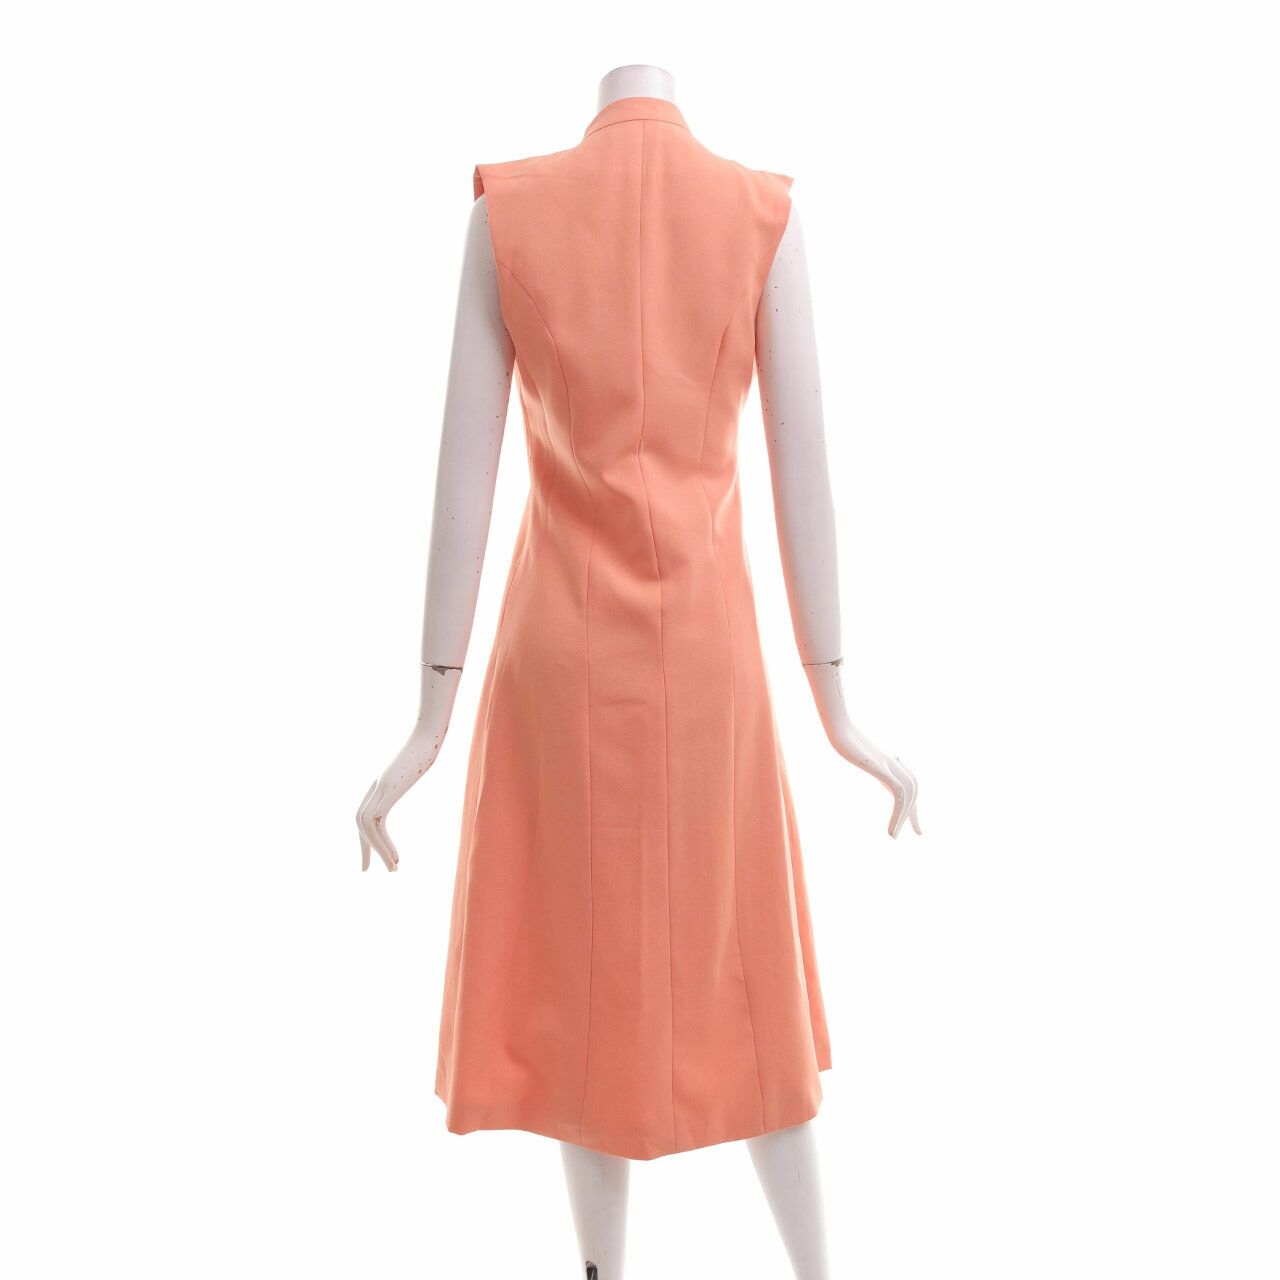 Marie & Frisco Peach Midi Dress